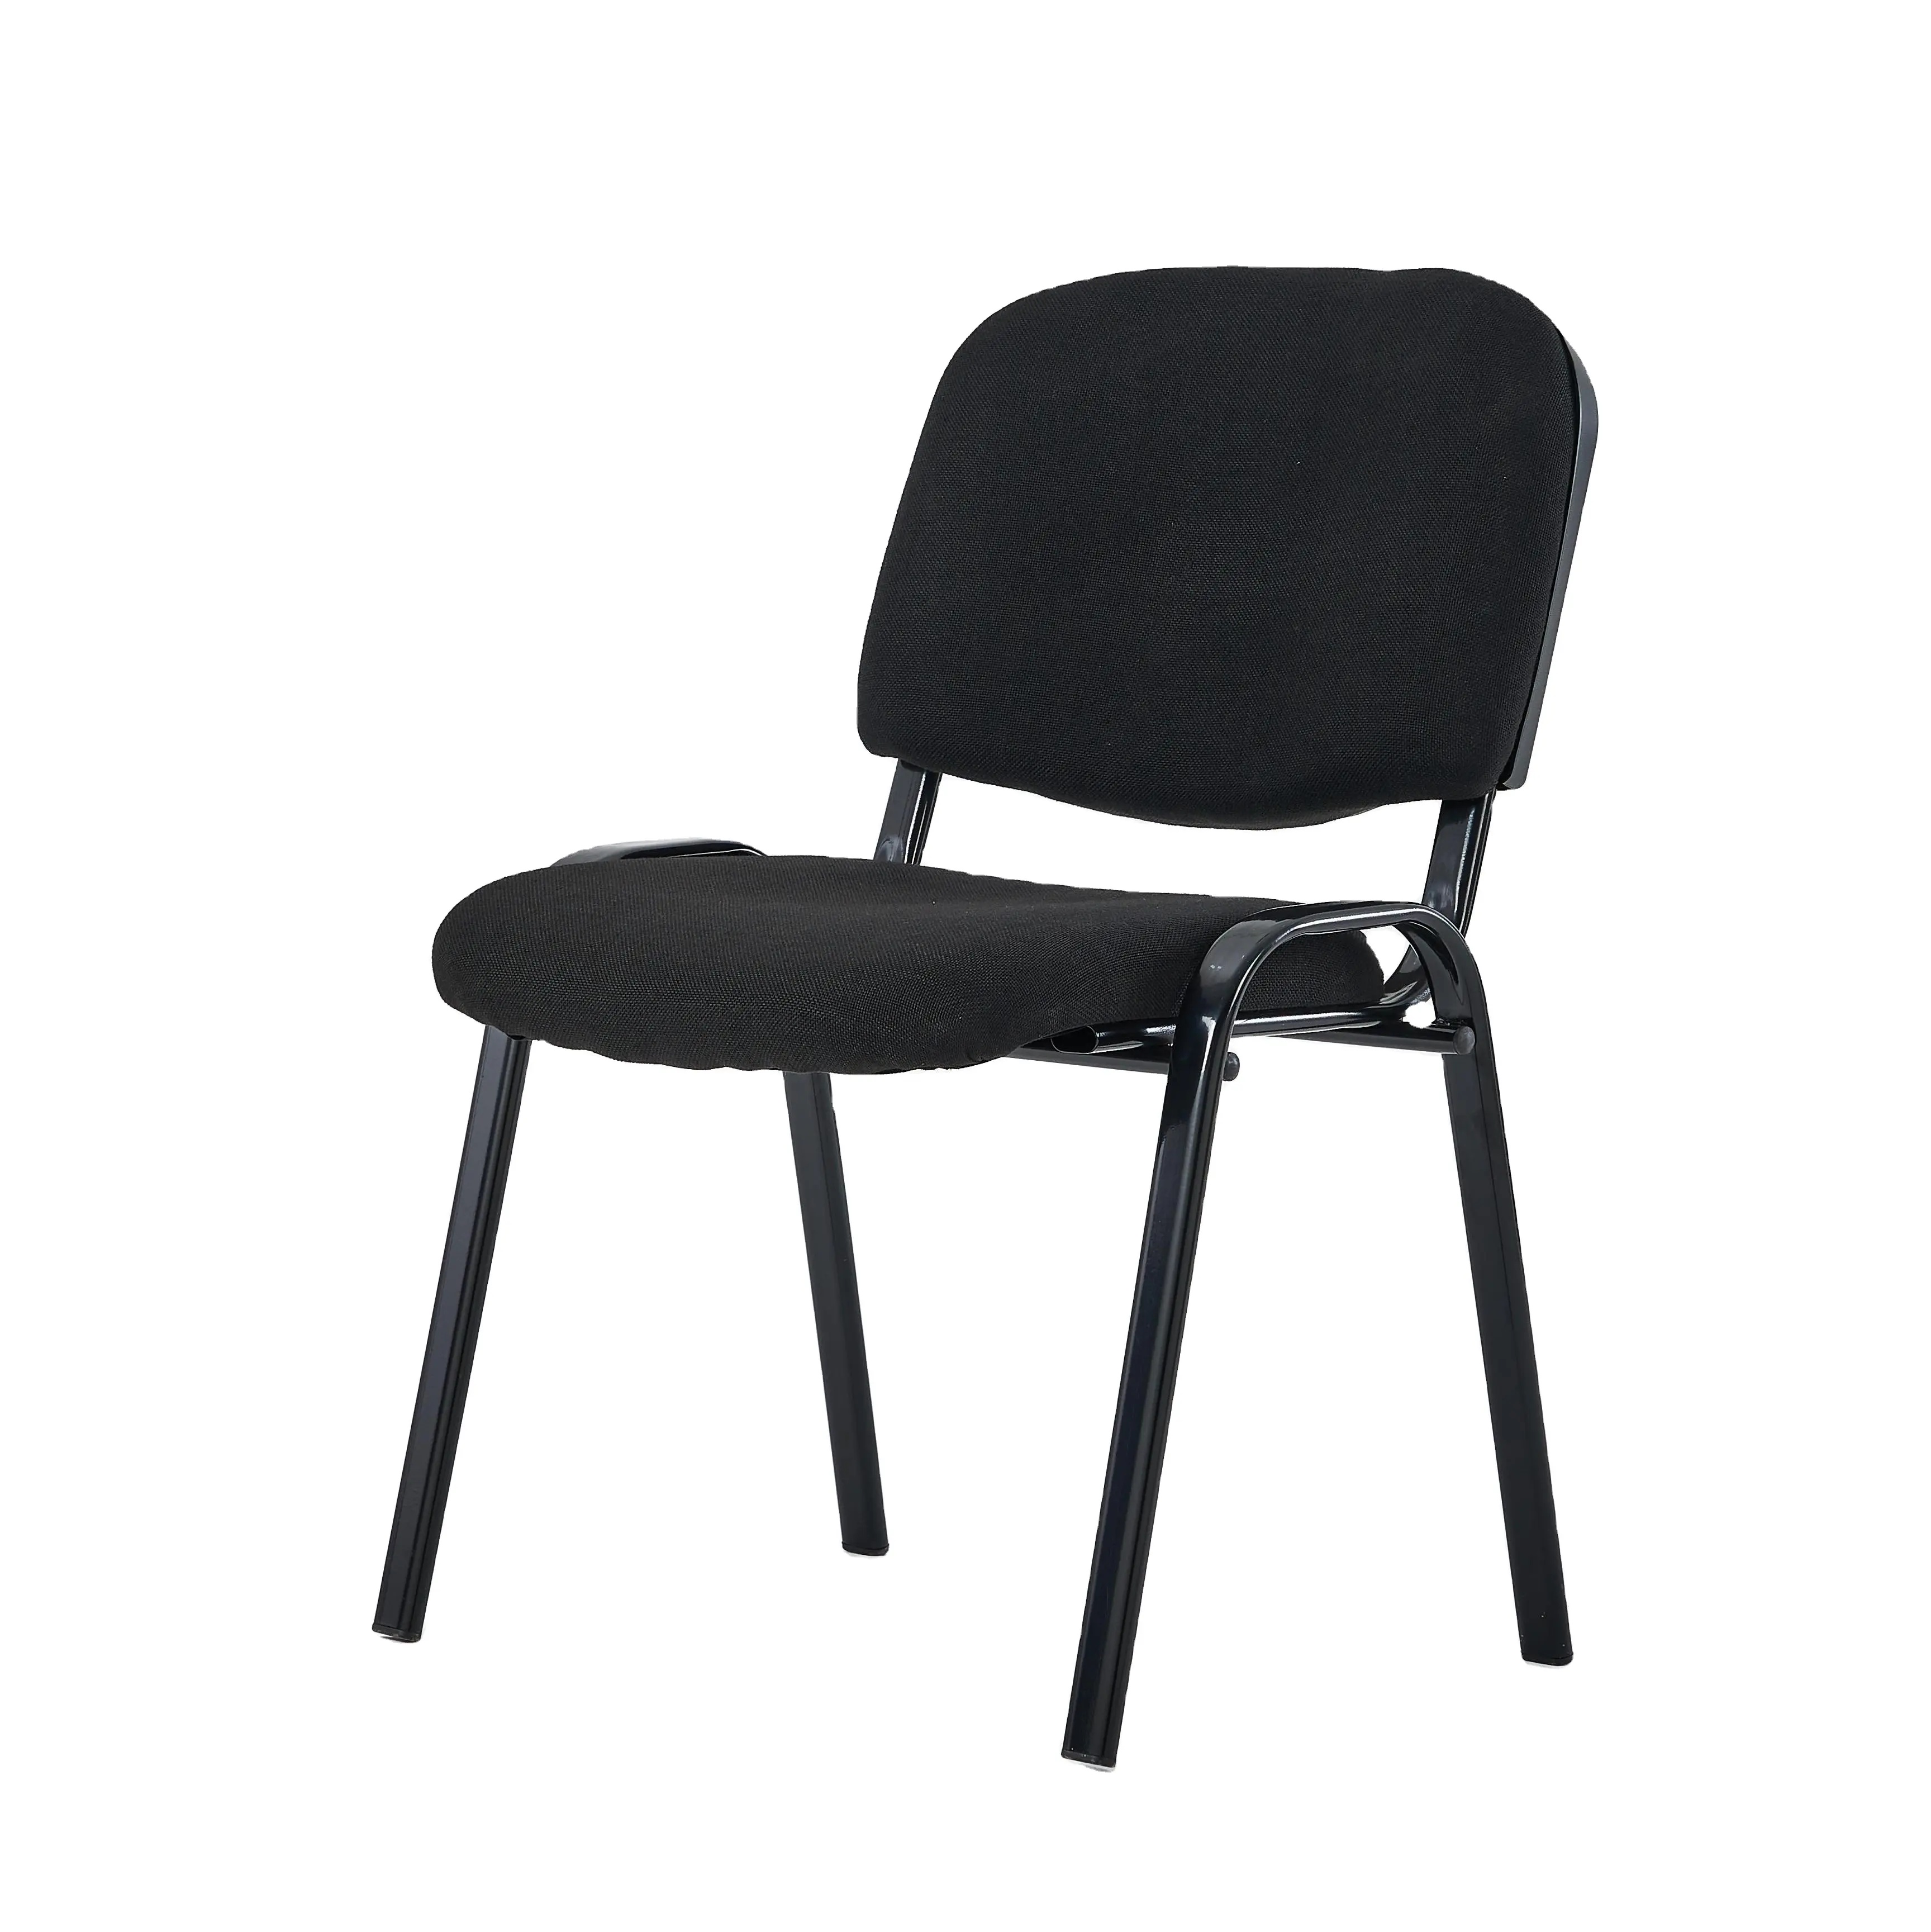 Grosir kursi wartawan murah hitam tanpa sandaran tangan kursi pengunjung dapat ditumpuk